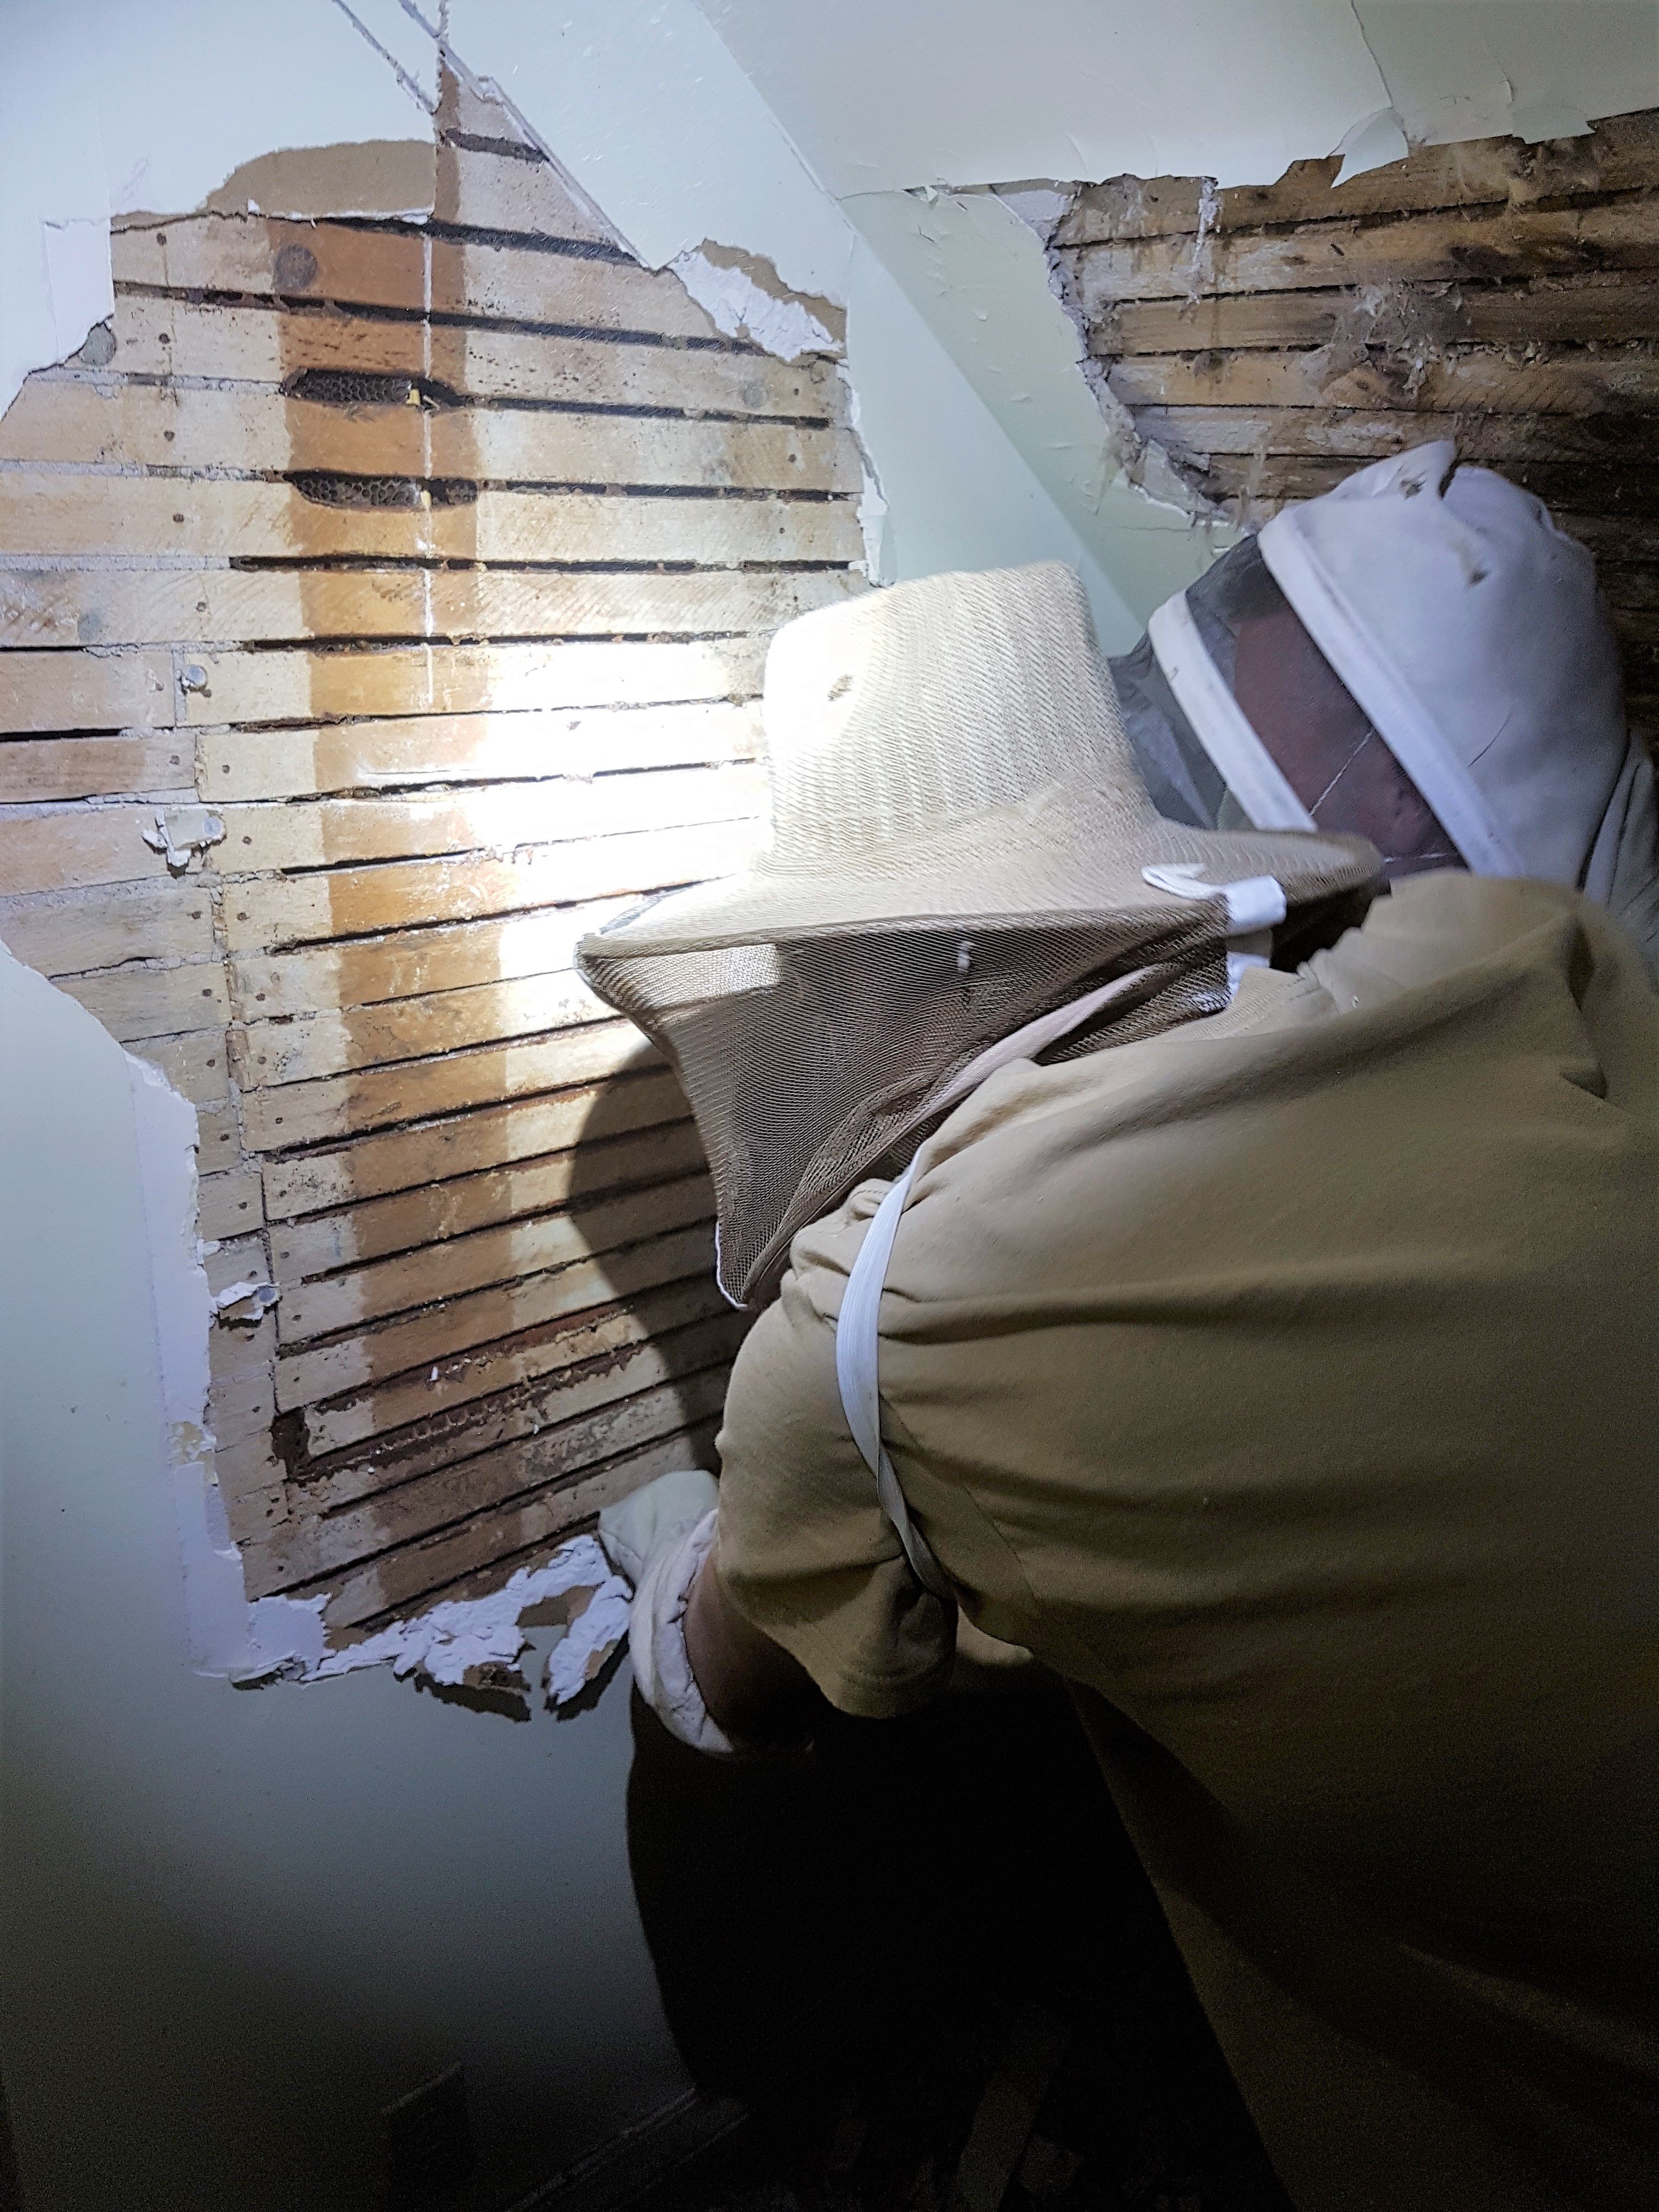 An Environmental Pest Control Beekeeper cutting a wall.